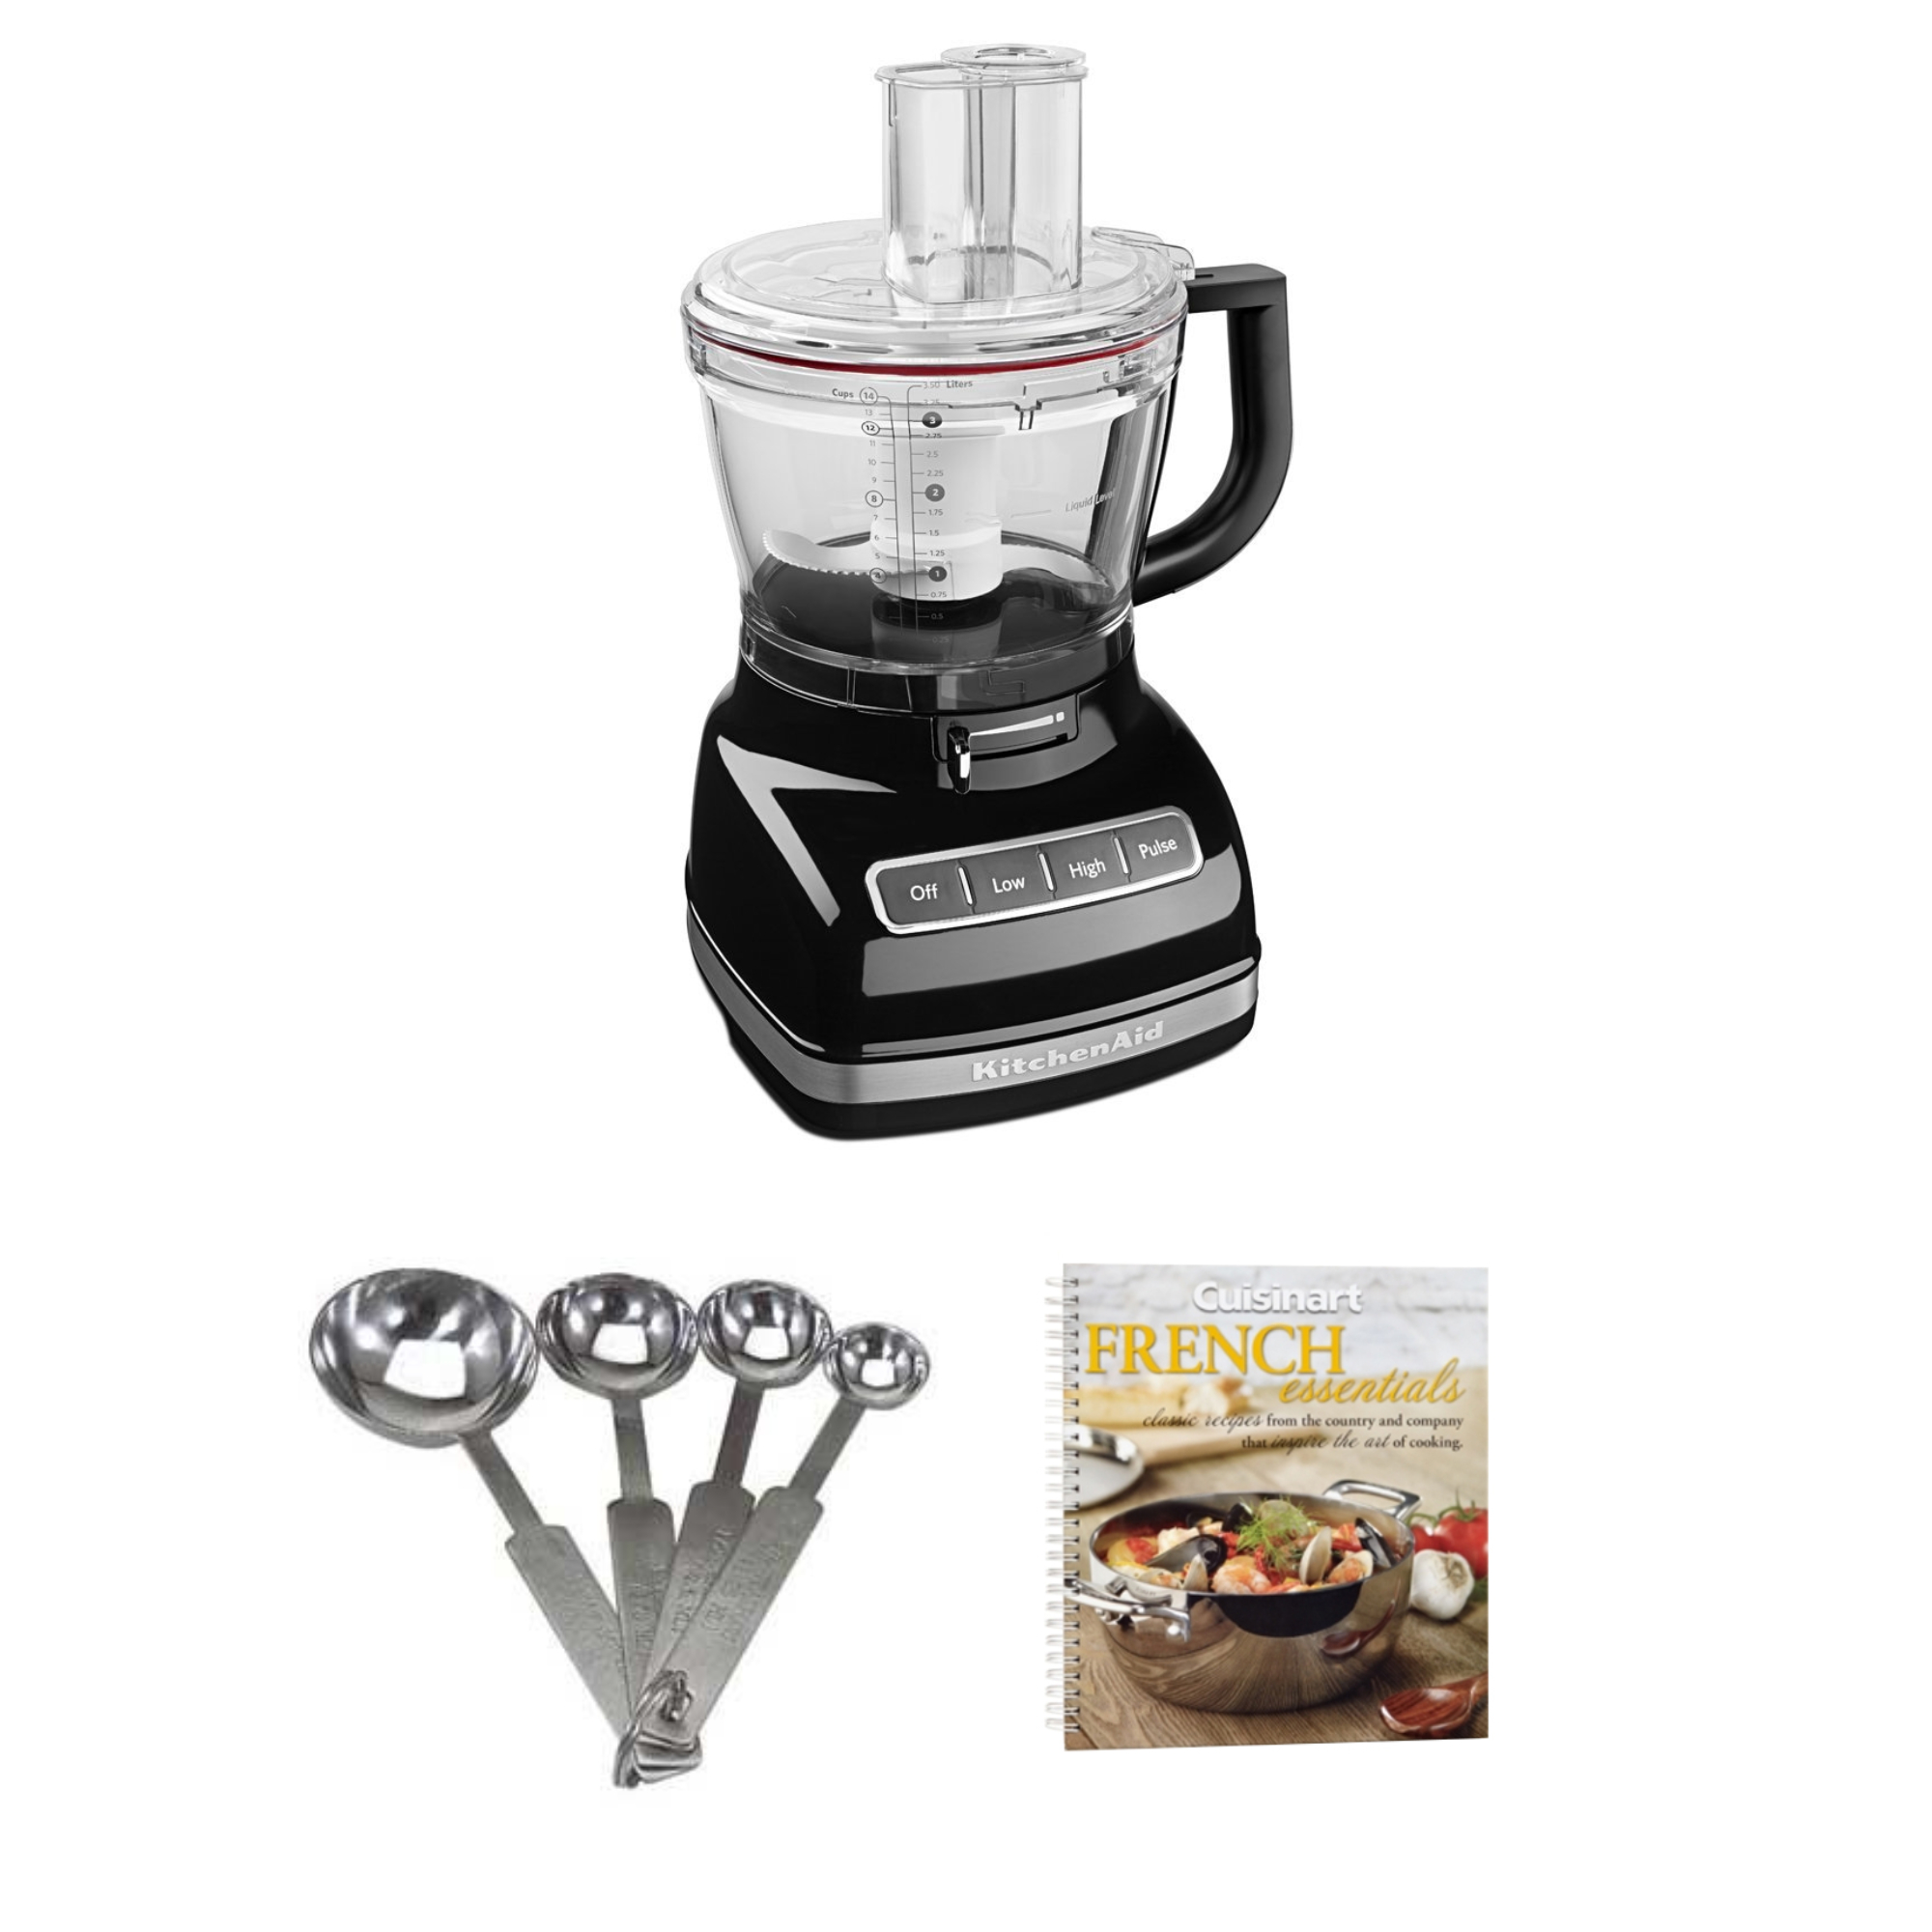 KitchenAid 14-Cup Food Processor + Free Cookbook and Measuring Spoons Set